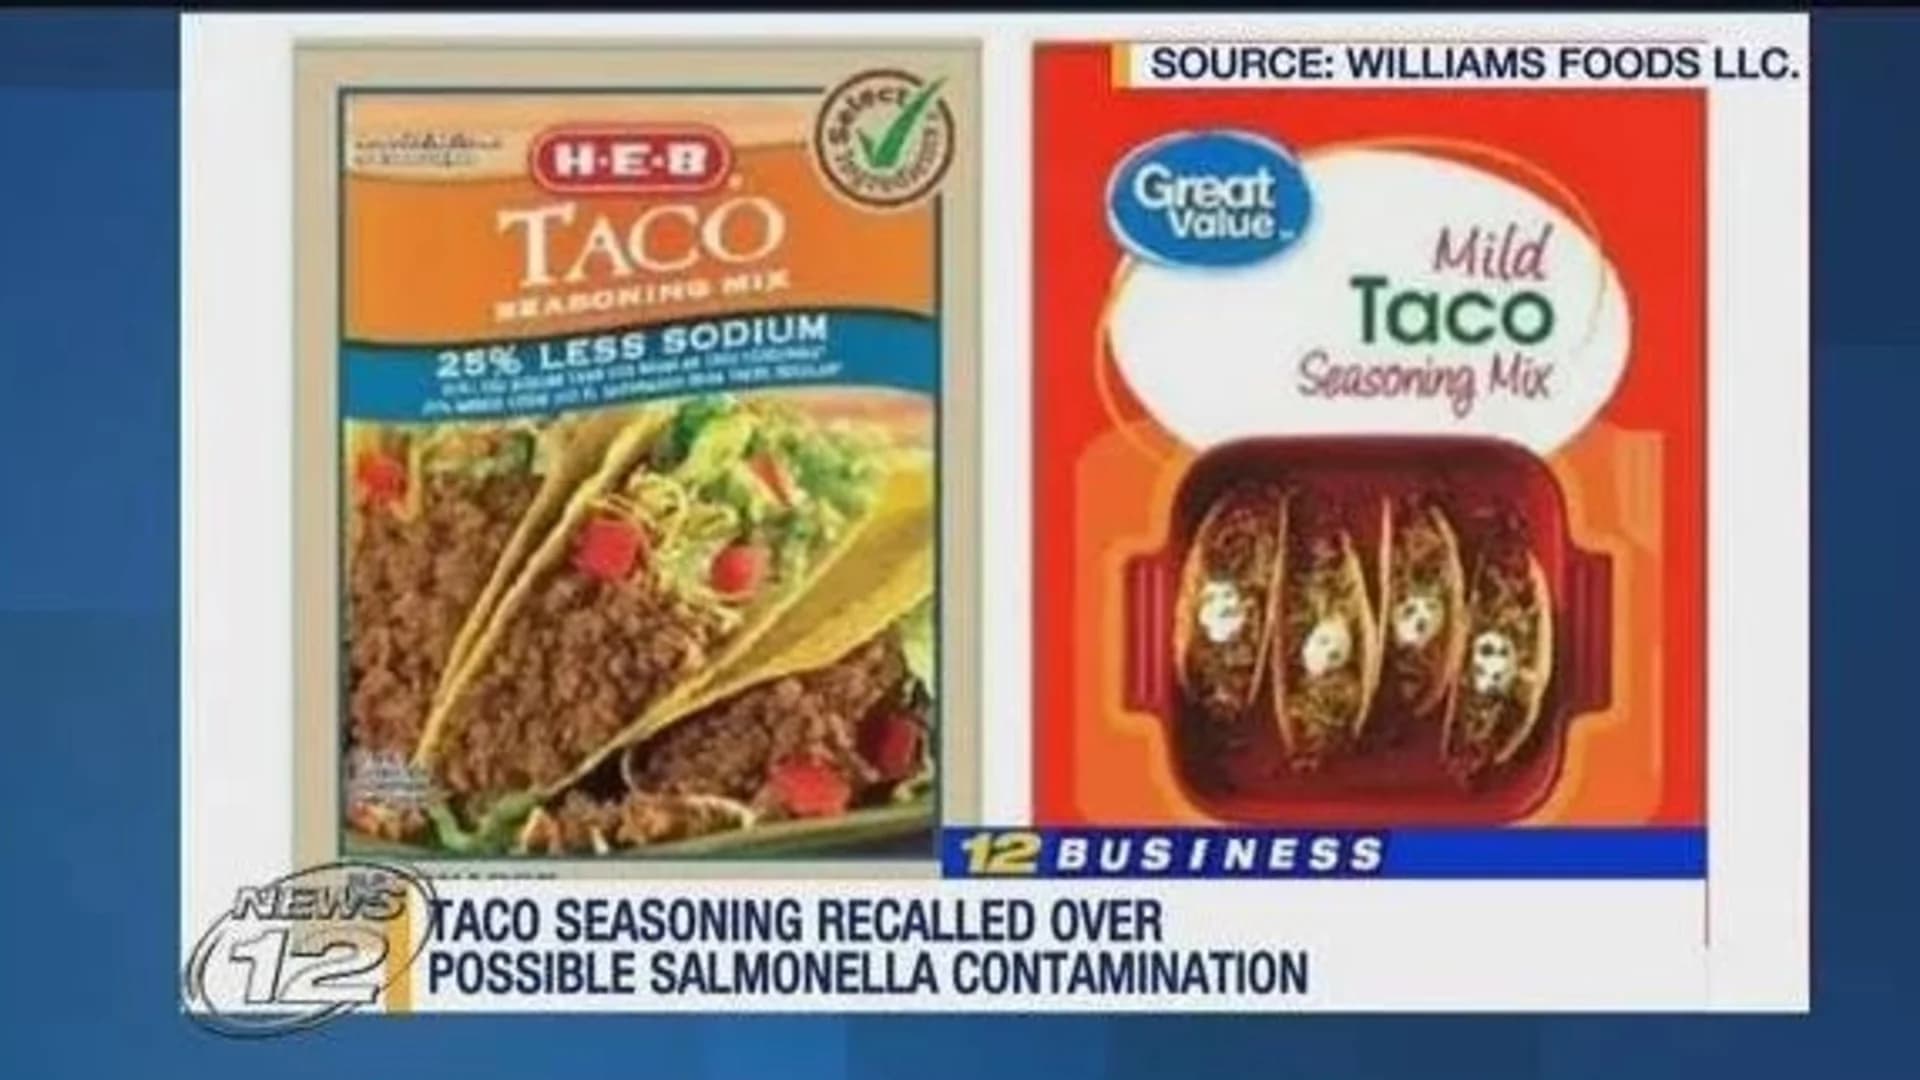 Williams Foods recalls taco seasoning over possible salmonella contamination